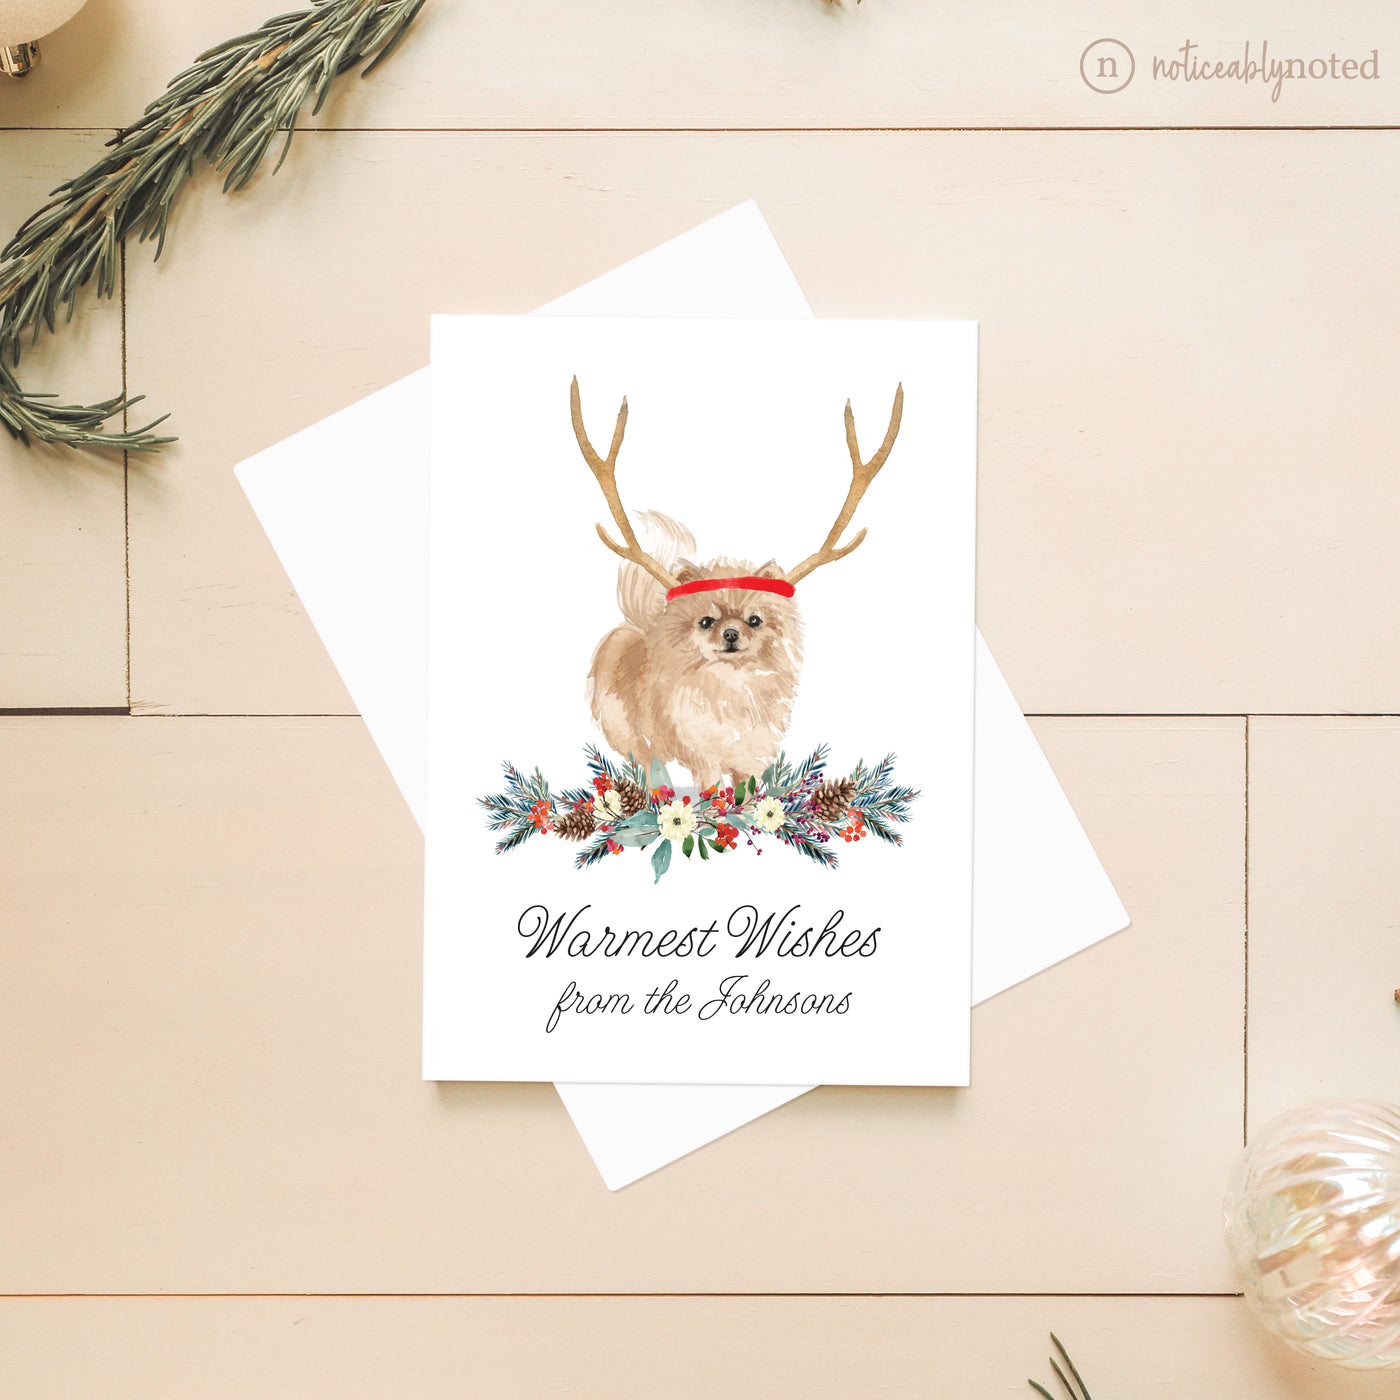 Pomeranian Dog Christmas Cards | Noticeably Noted